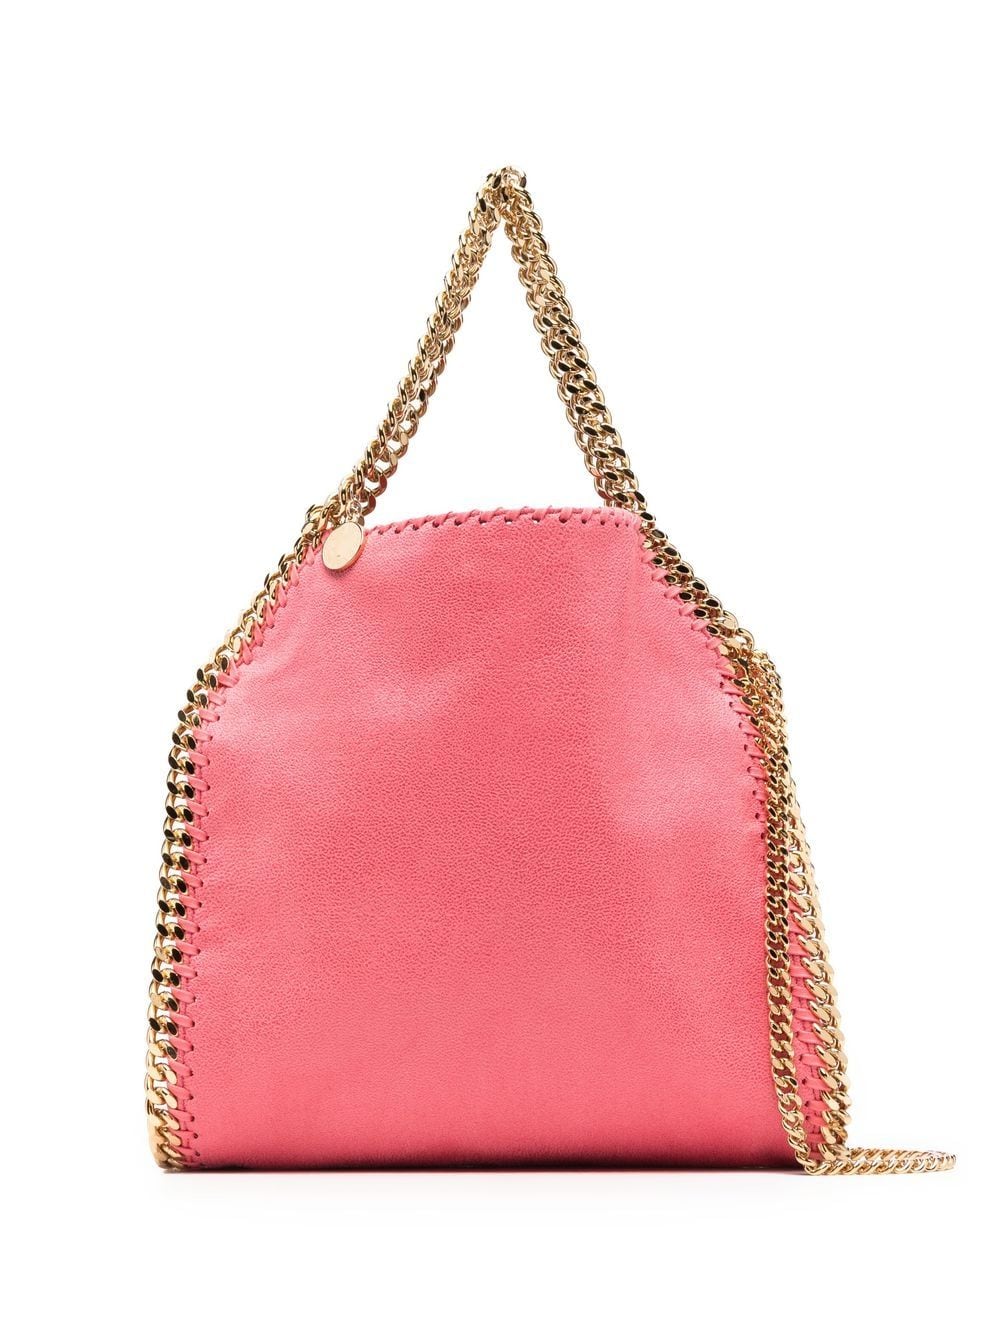 Stella McCartney mini Falabella tote bag - Pink